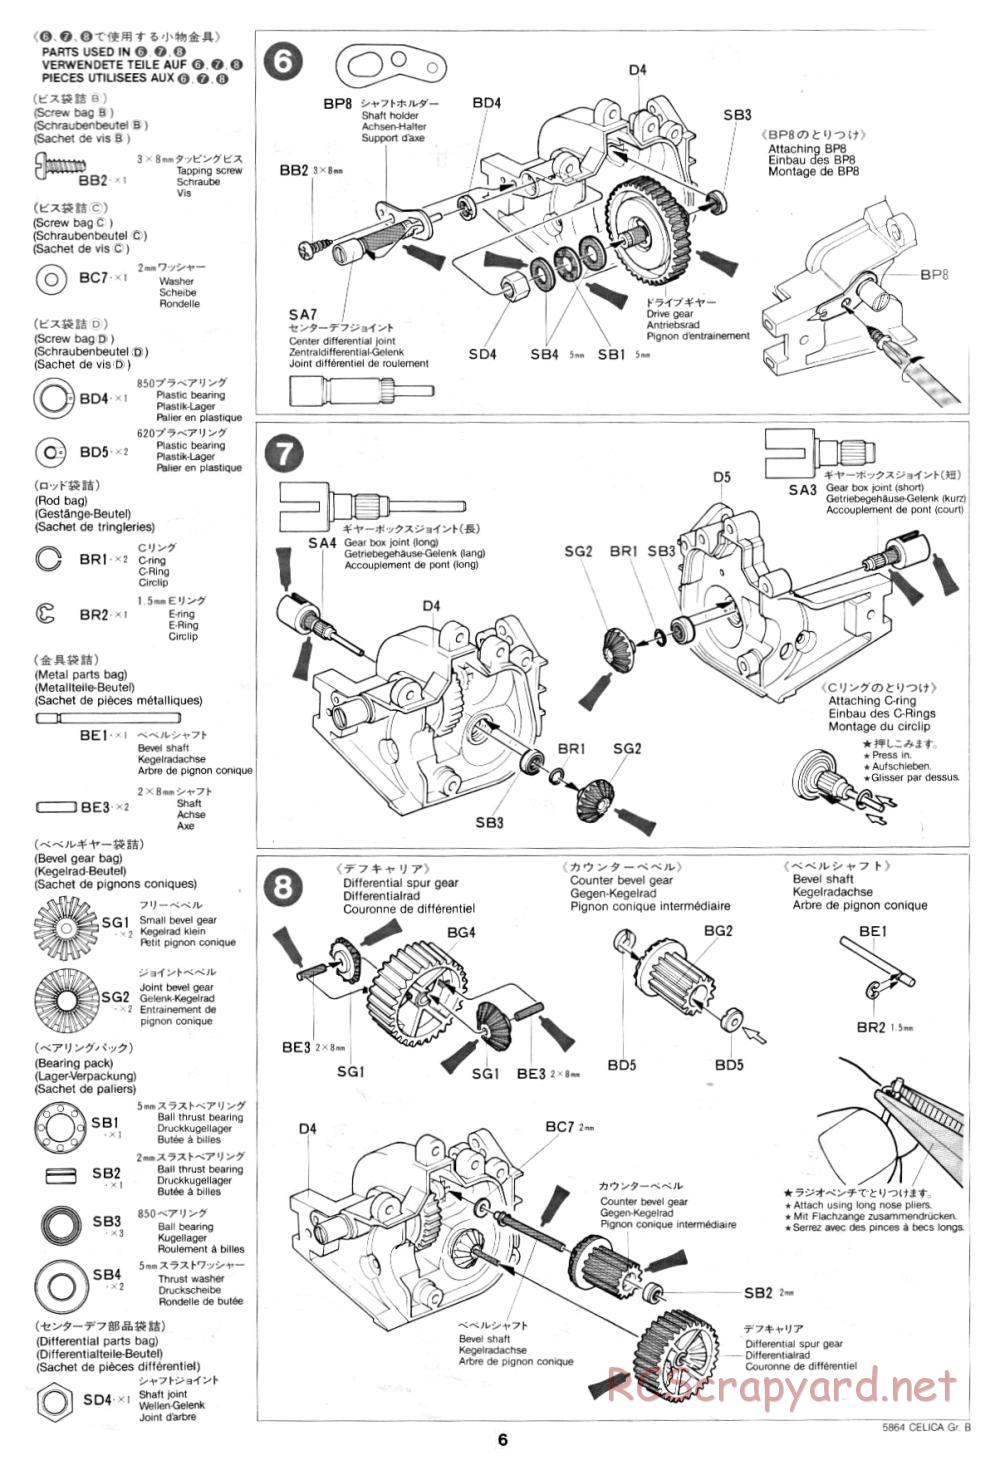 Tamiya - Toyota Celica Gr.B Rally Special - 58064 - Manual - Page 6